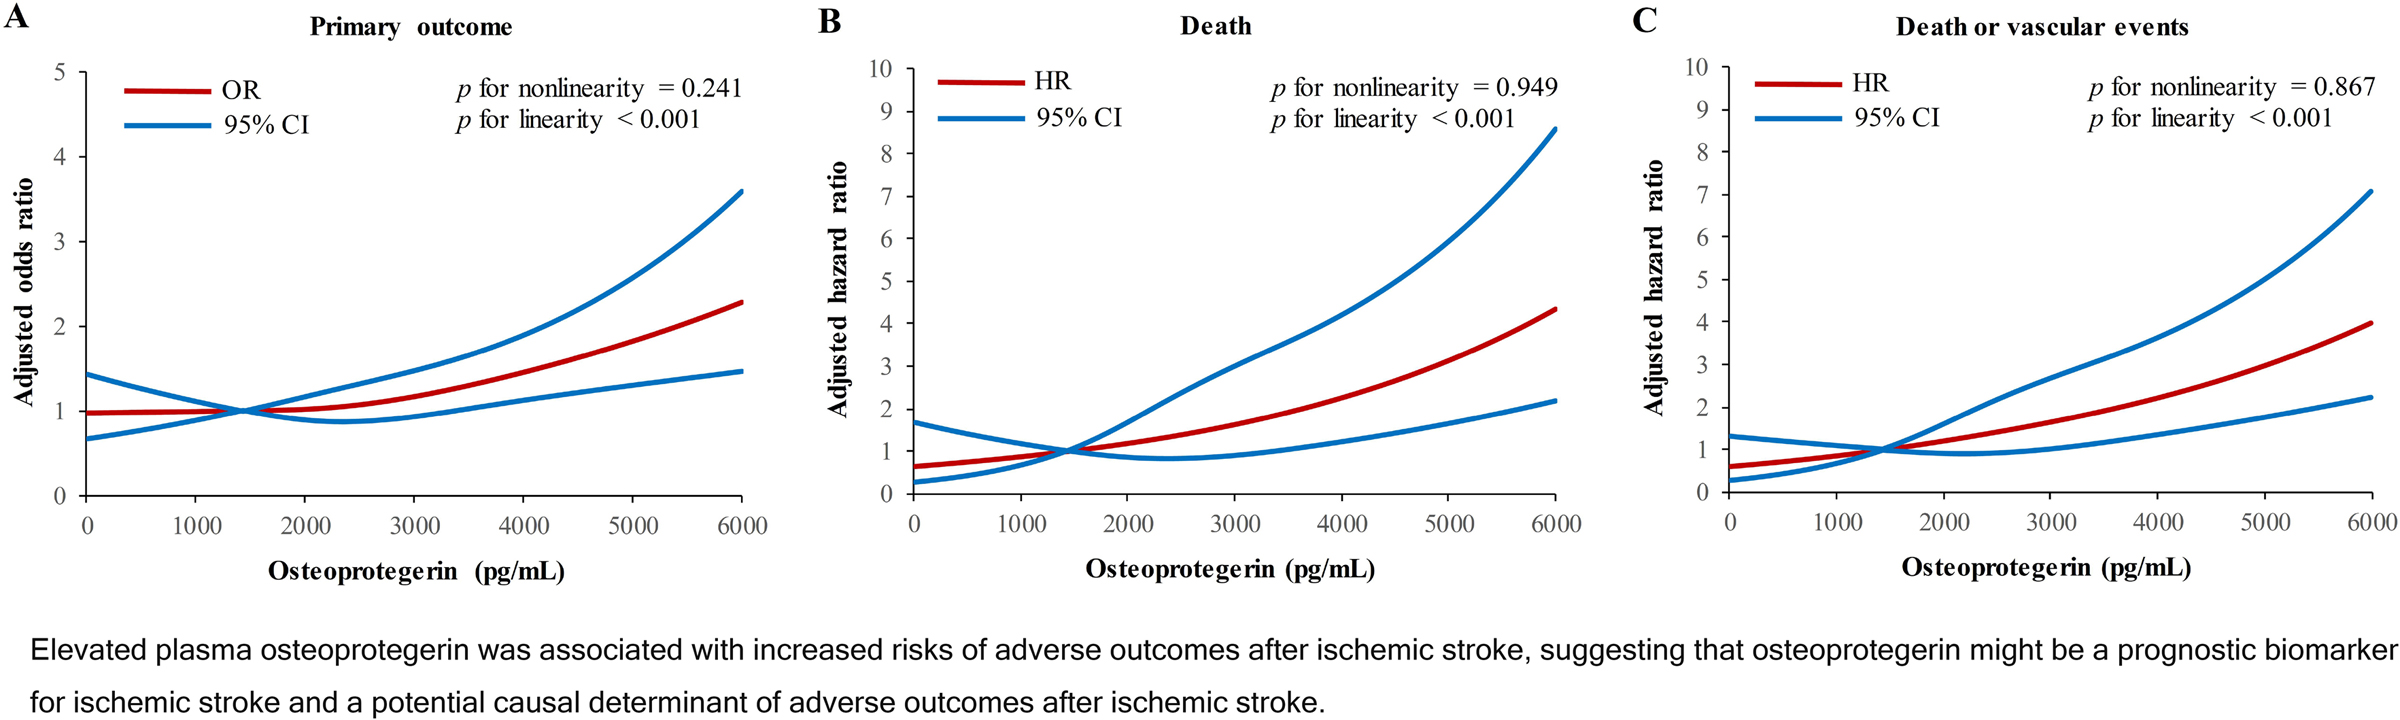 Osteoprotegerin and Ischemic Stroke Prognosis: A Prospective Multicenter Study and Mendelian Randomization Analysis